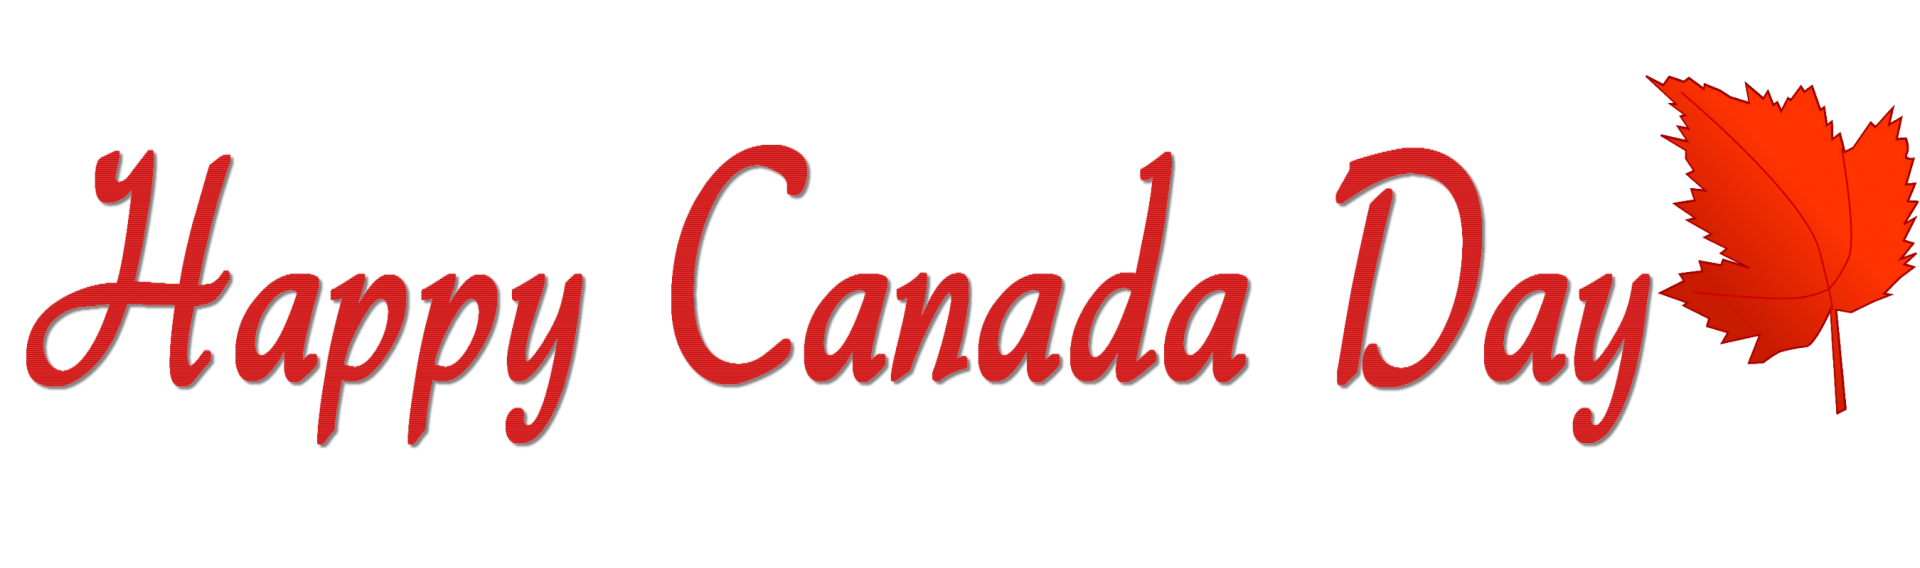 Canada Day Statutory Holidays in Canada statutory holiday